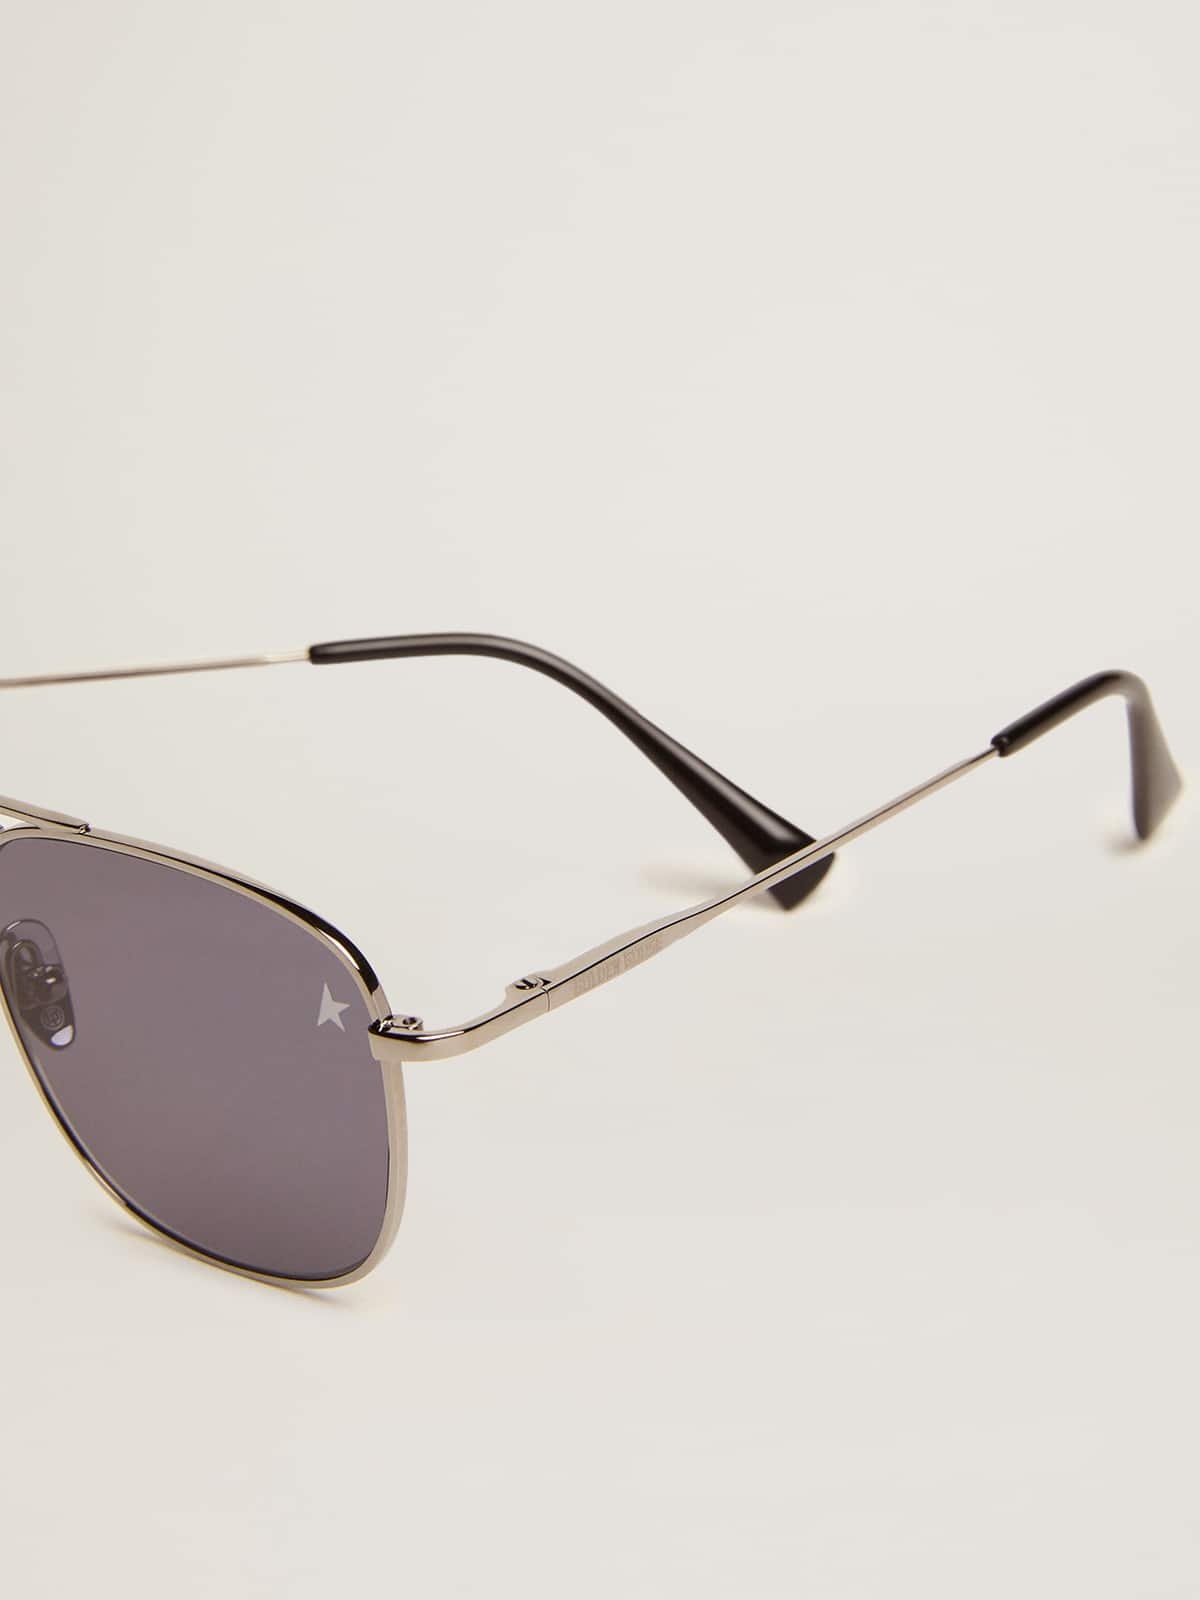 Roger aviator sunglasses with black frame and black lenses - 2